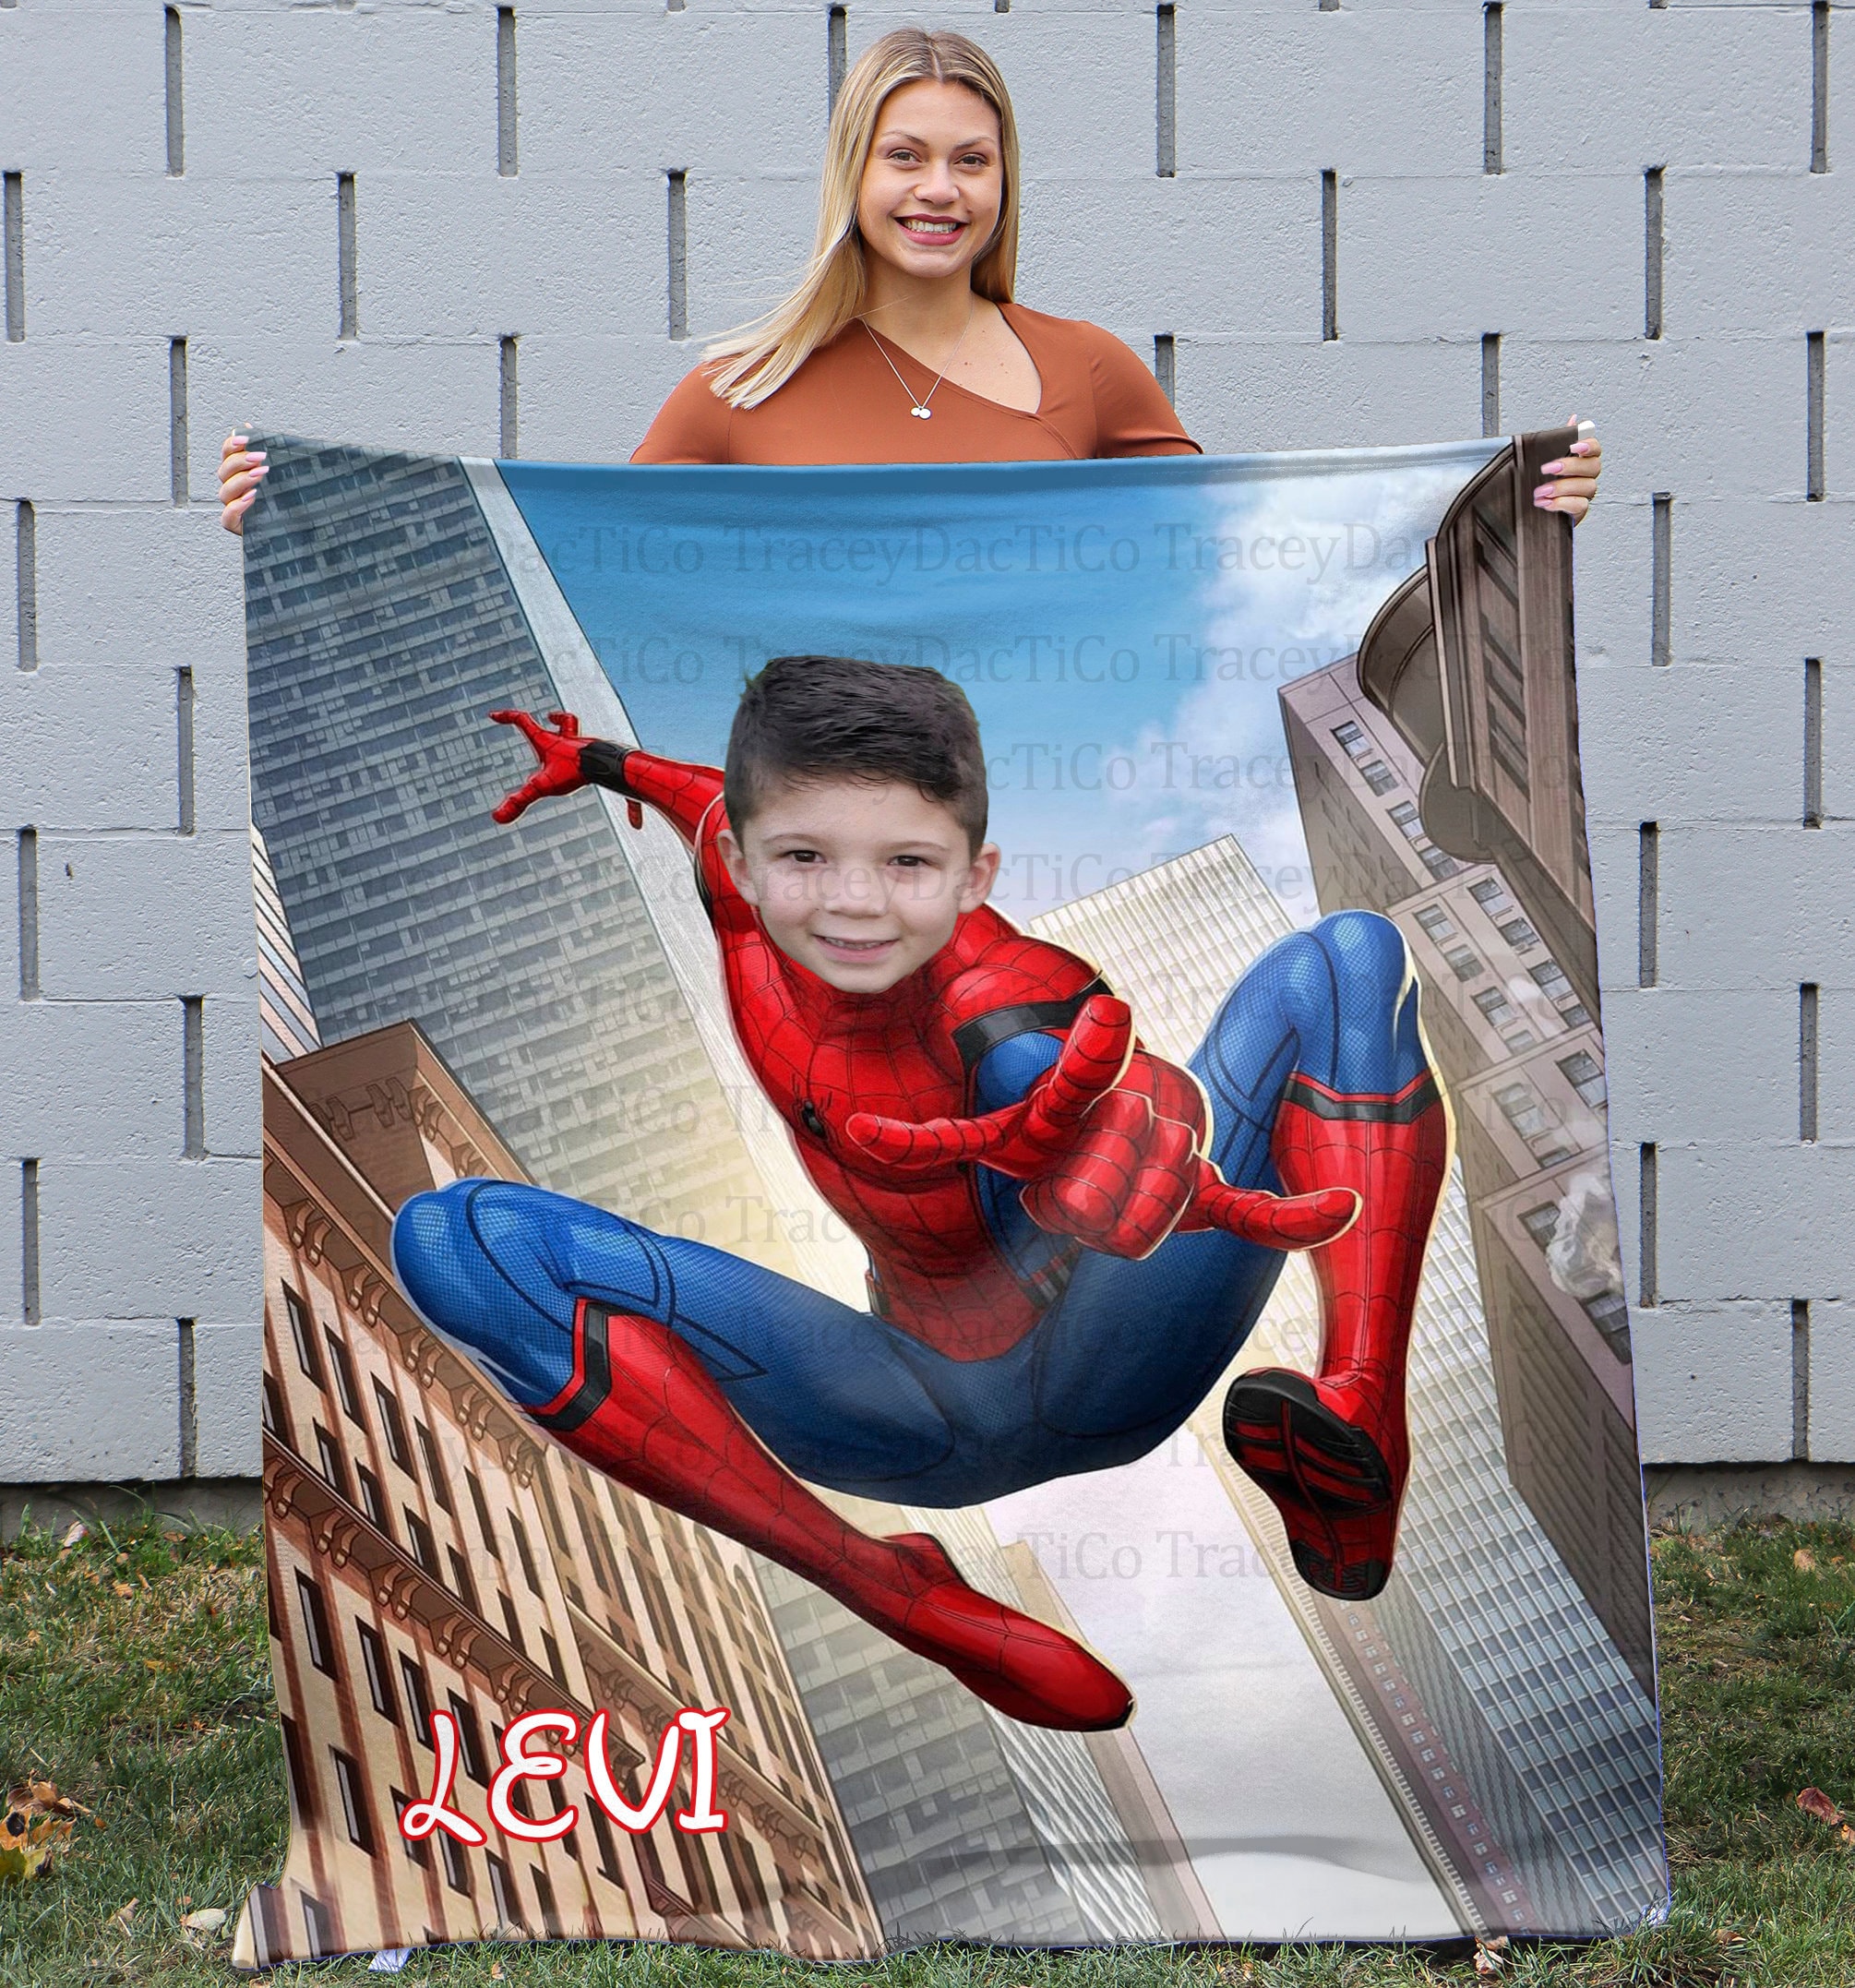 Spidey and His Amazing Friends Custom Blanket, Kids Spidey Marvel Blanket, Spider  Man Gift, Marvel Gift for Baby Adult,custom Spiderman Gift 